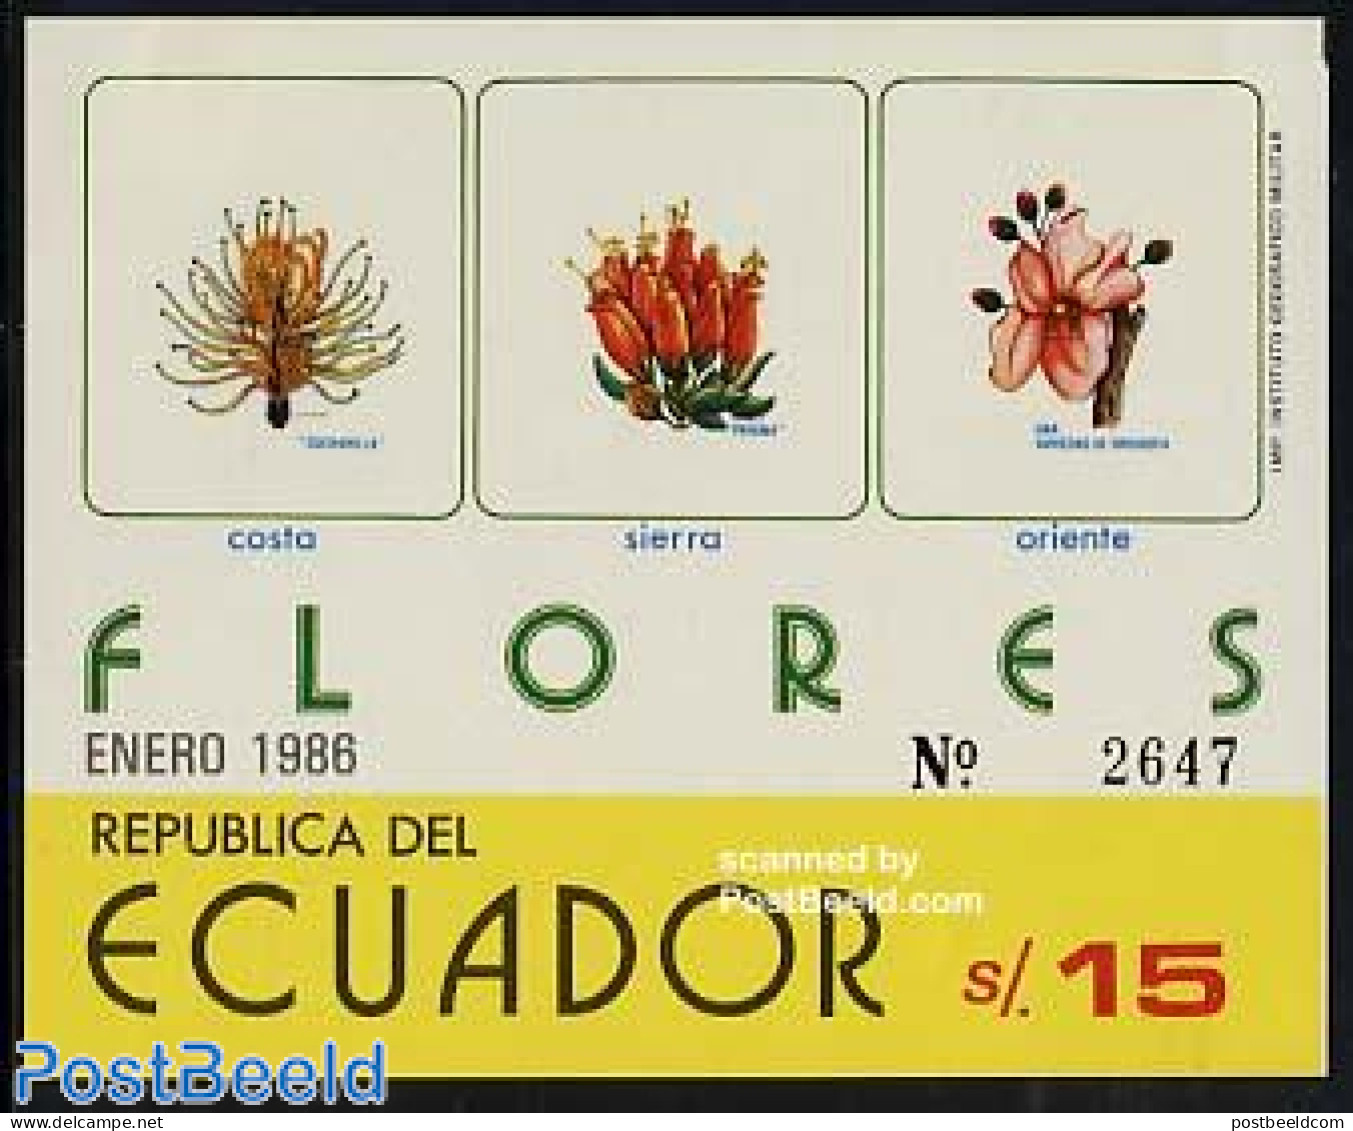 Ecuador 1986 Flowers S/s, Mint NH, Nature - Flowers & Plants - Ecuador